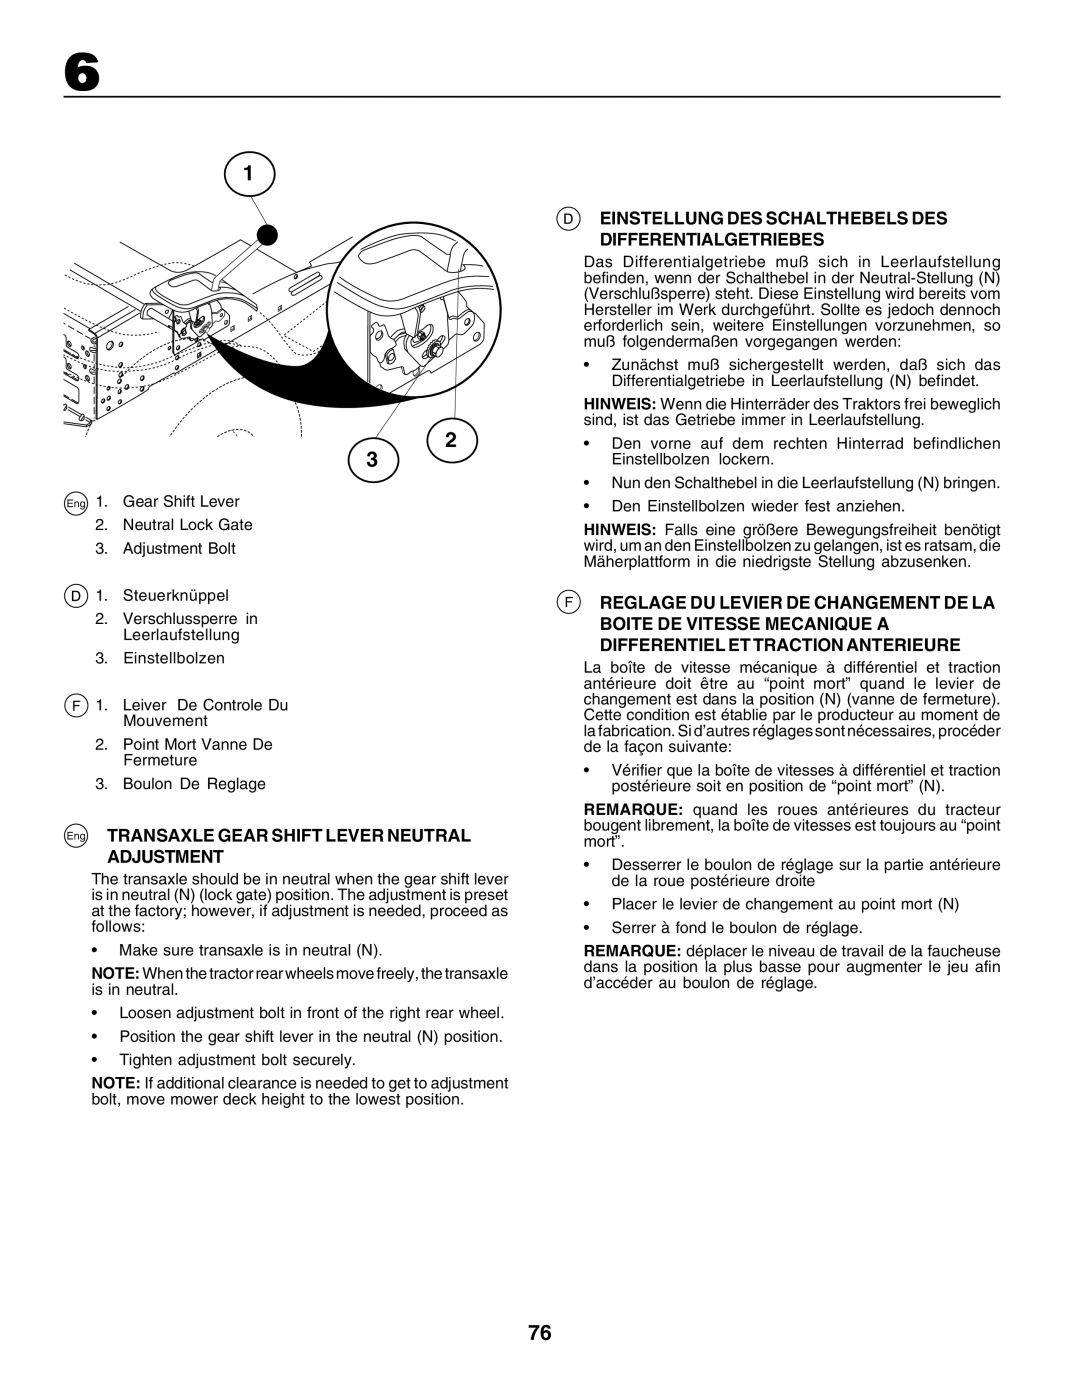 Husqvarna CT135 instruction manual Eng TRANSAXLE GEAR SHIFT LEVER NEUTRAL ADJUSTMENT 